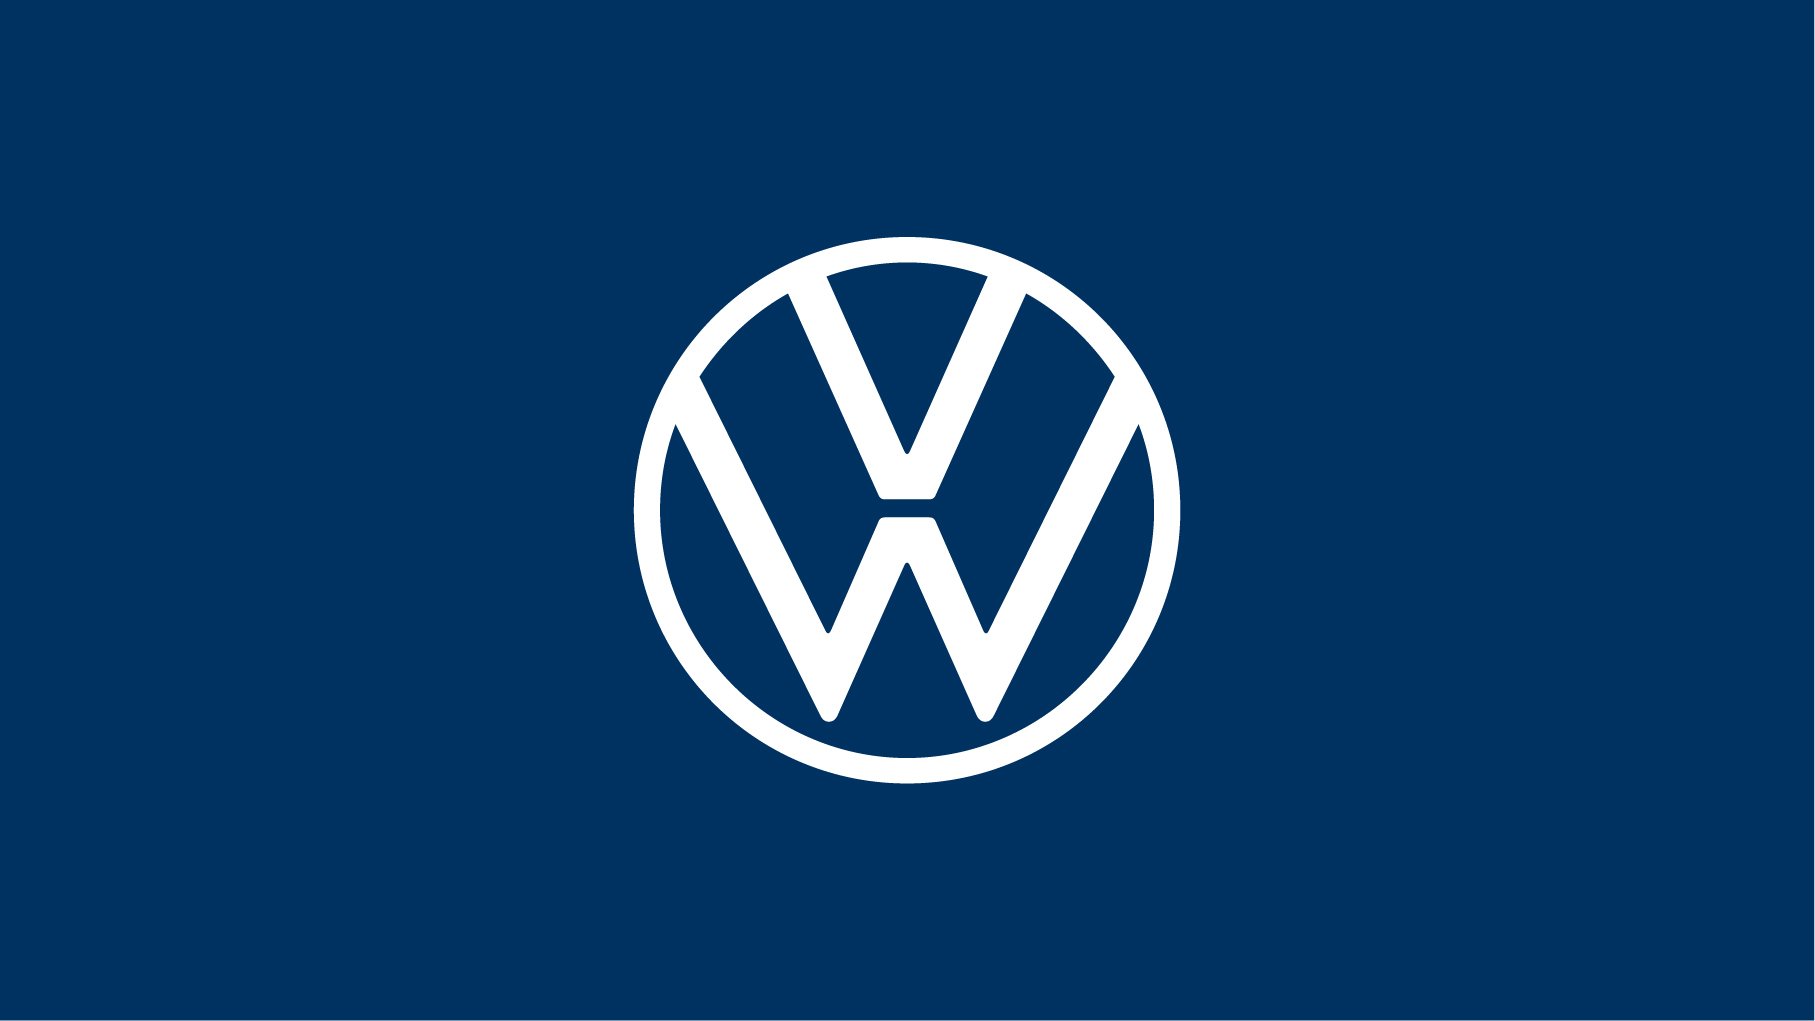 Fréttatilkynning frá Volkswagen 08.09.2022